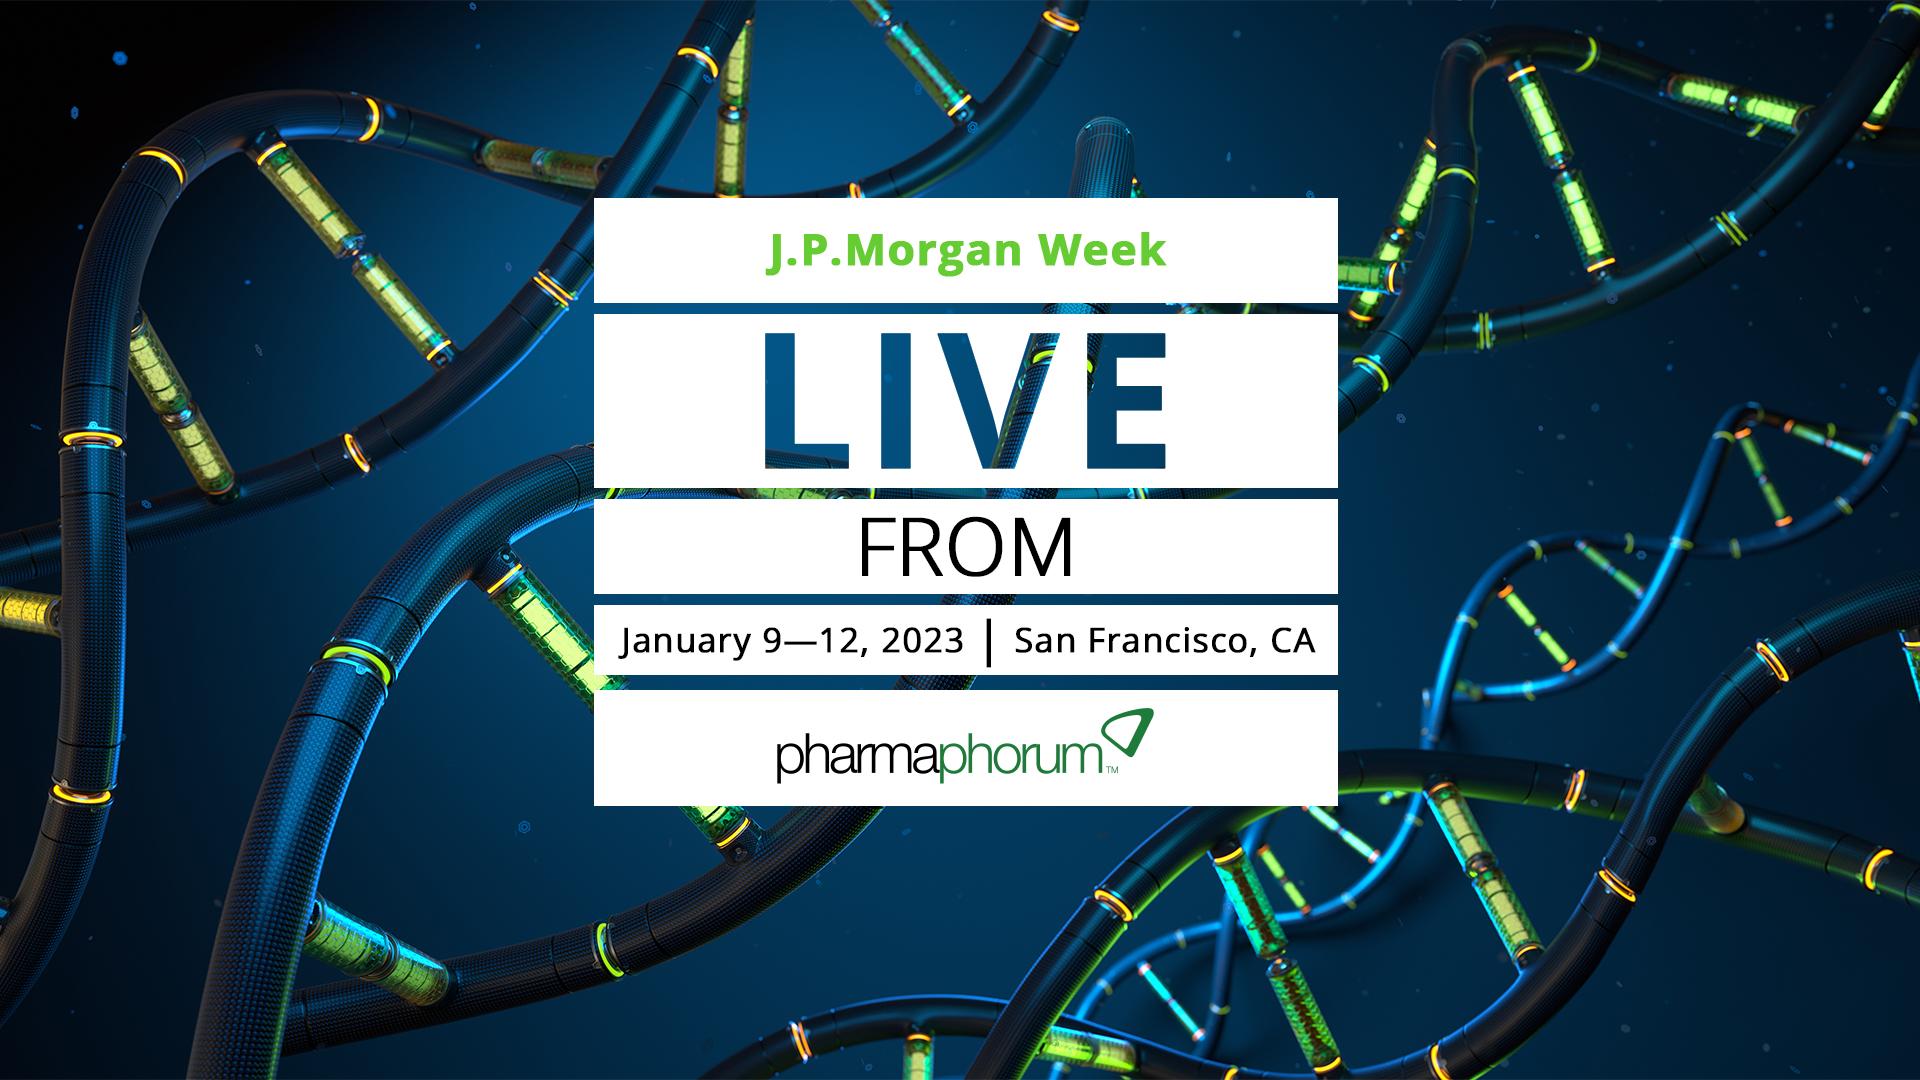 Live from JP Morgan Week 2023